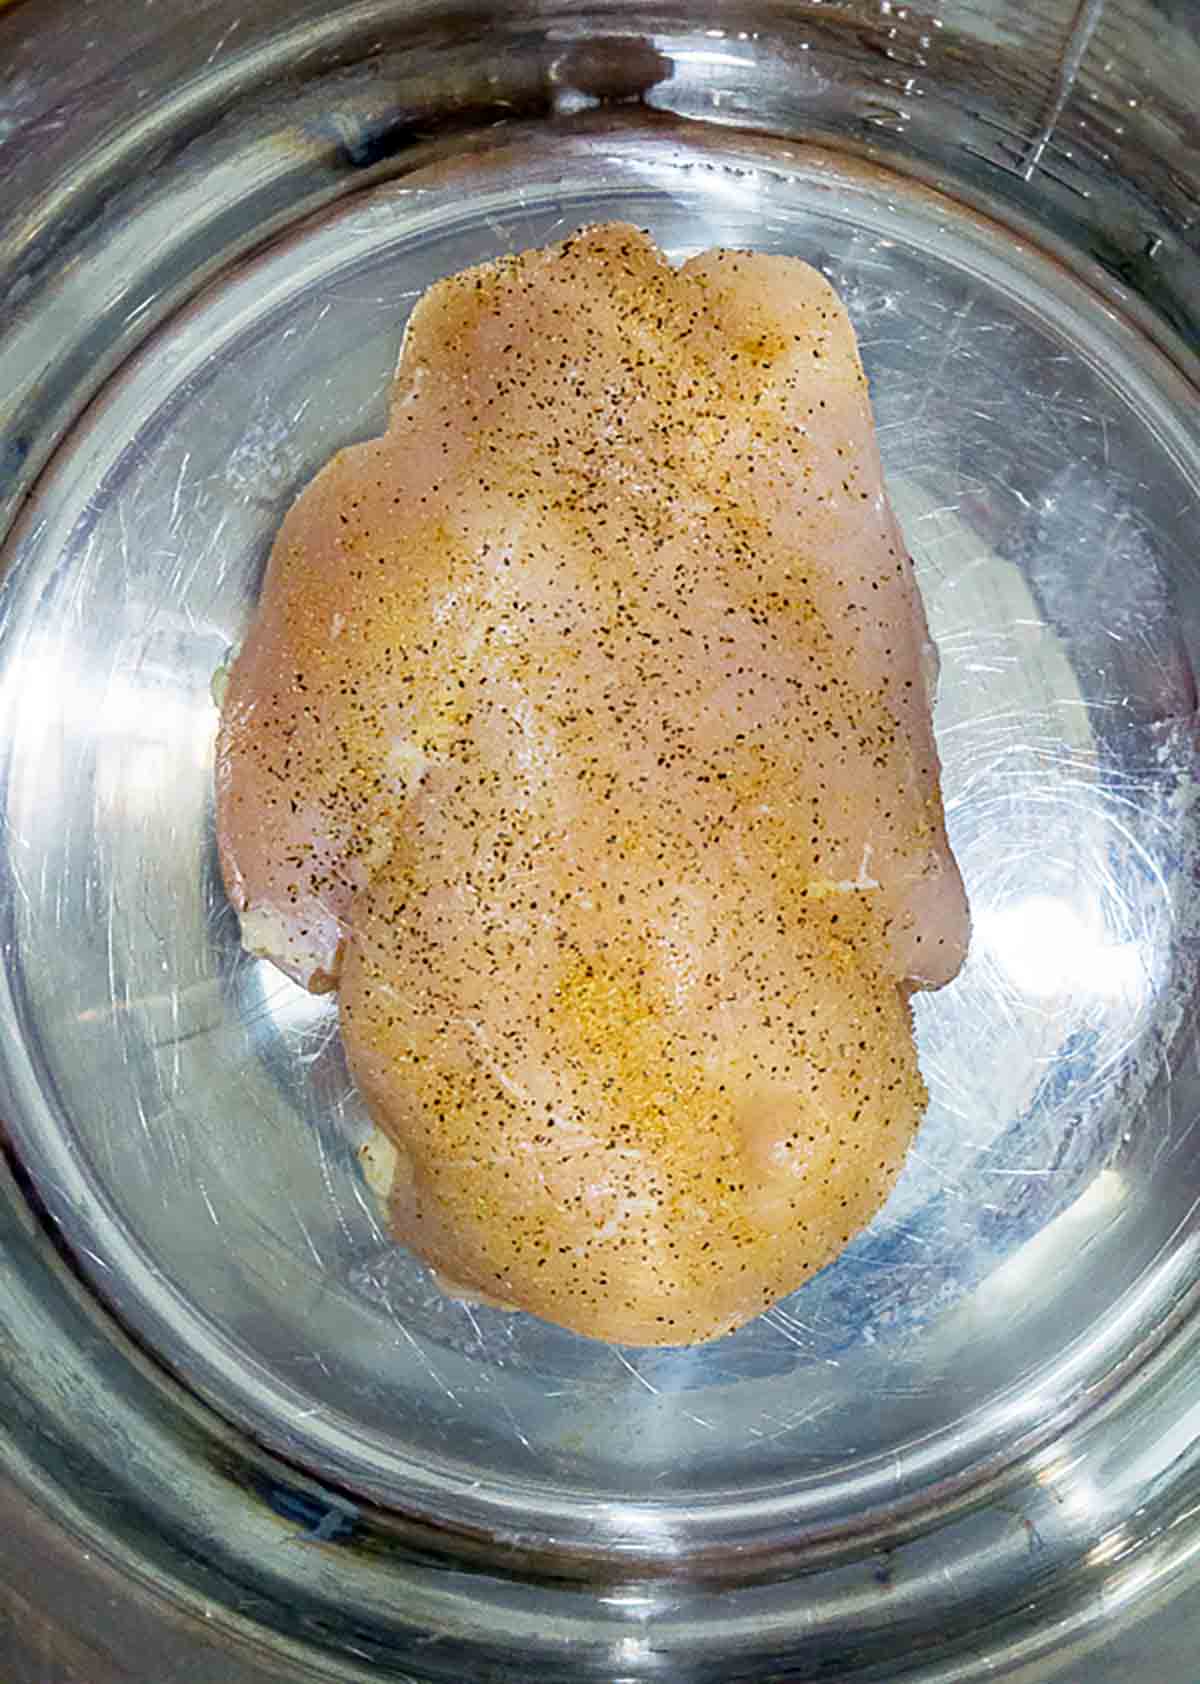 Seasoned chicken breast in the instant pot